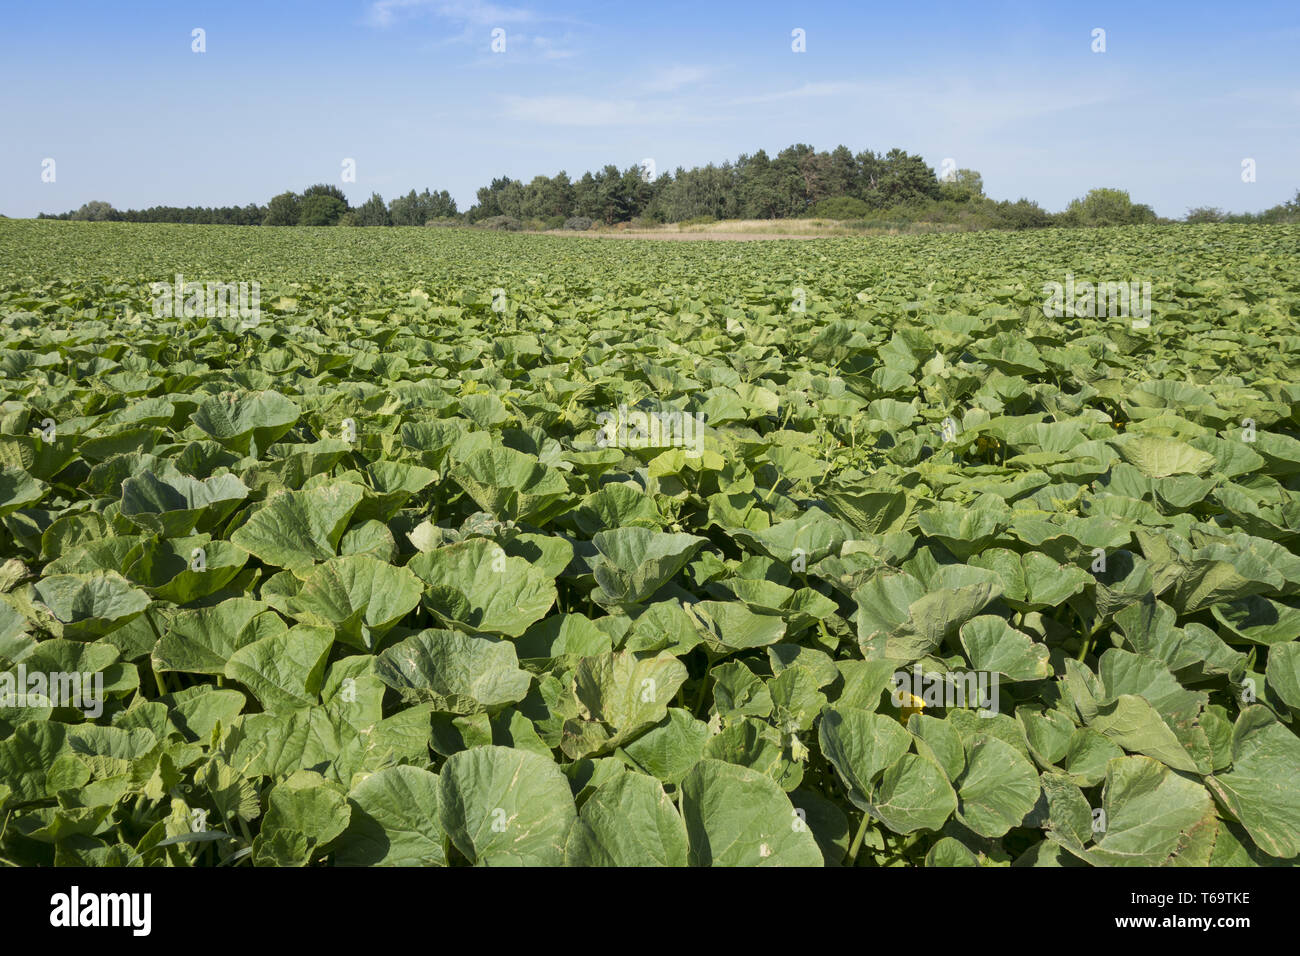 Pumpkins in a field Stock Photo